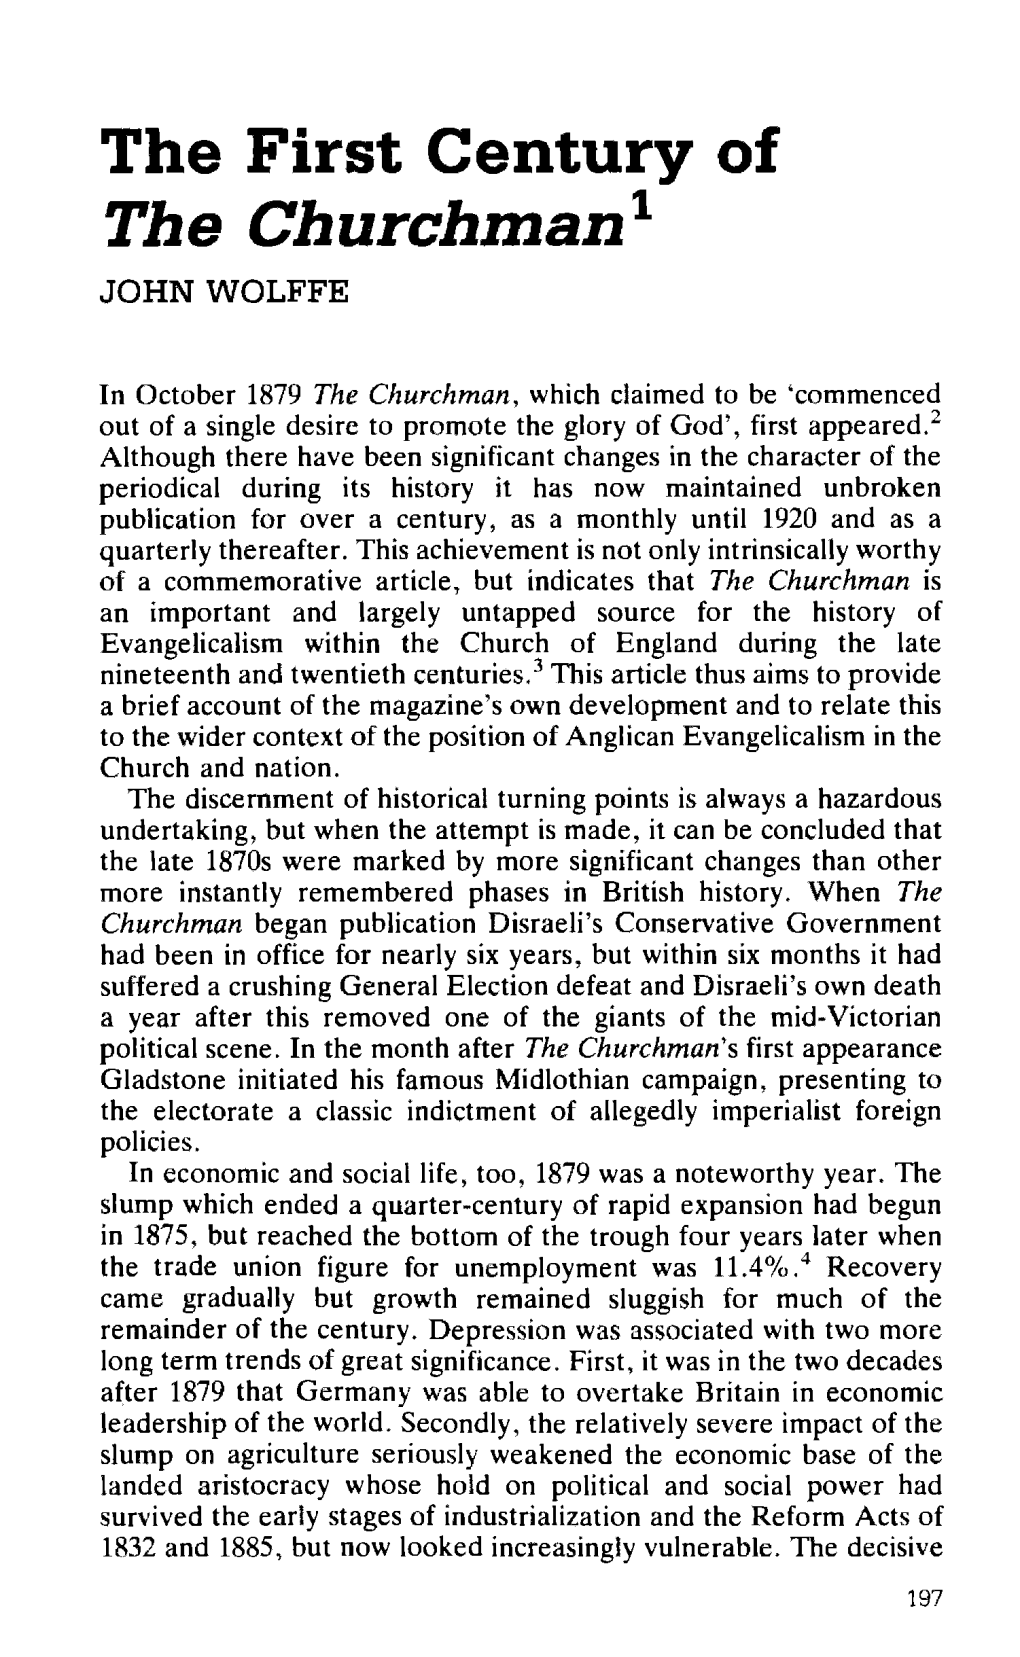 The First Century of the Churchman 1 JOHN WOLFFE